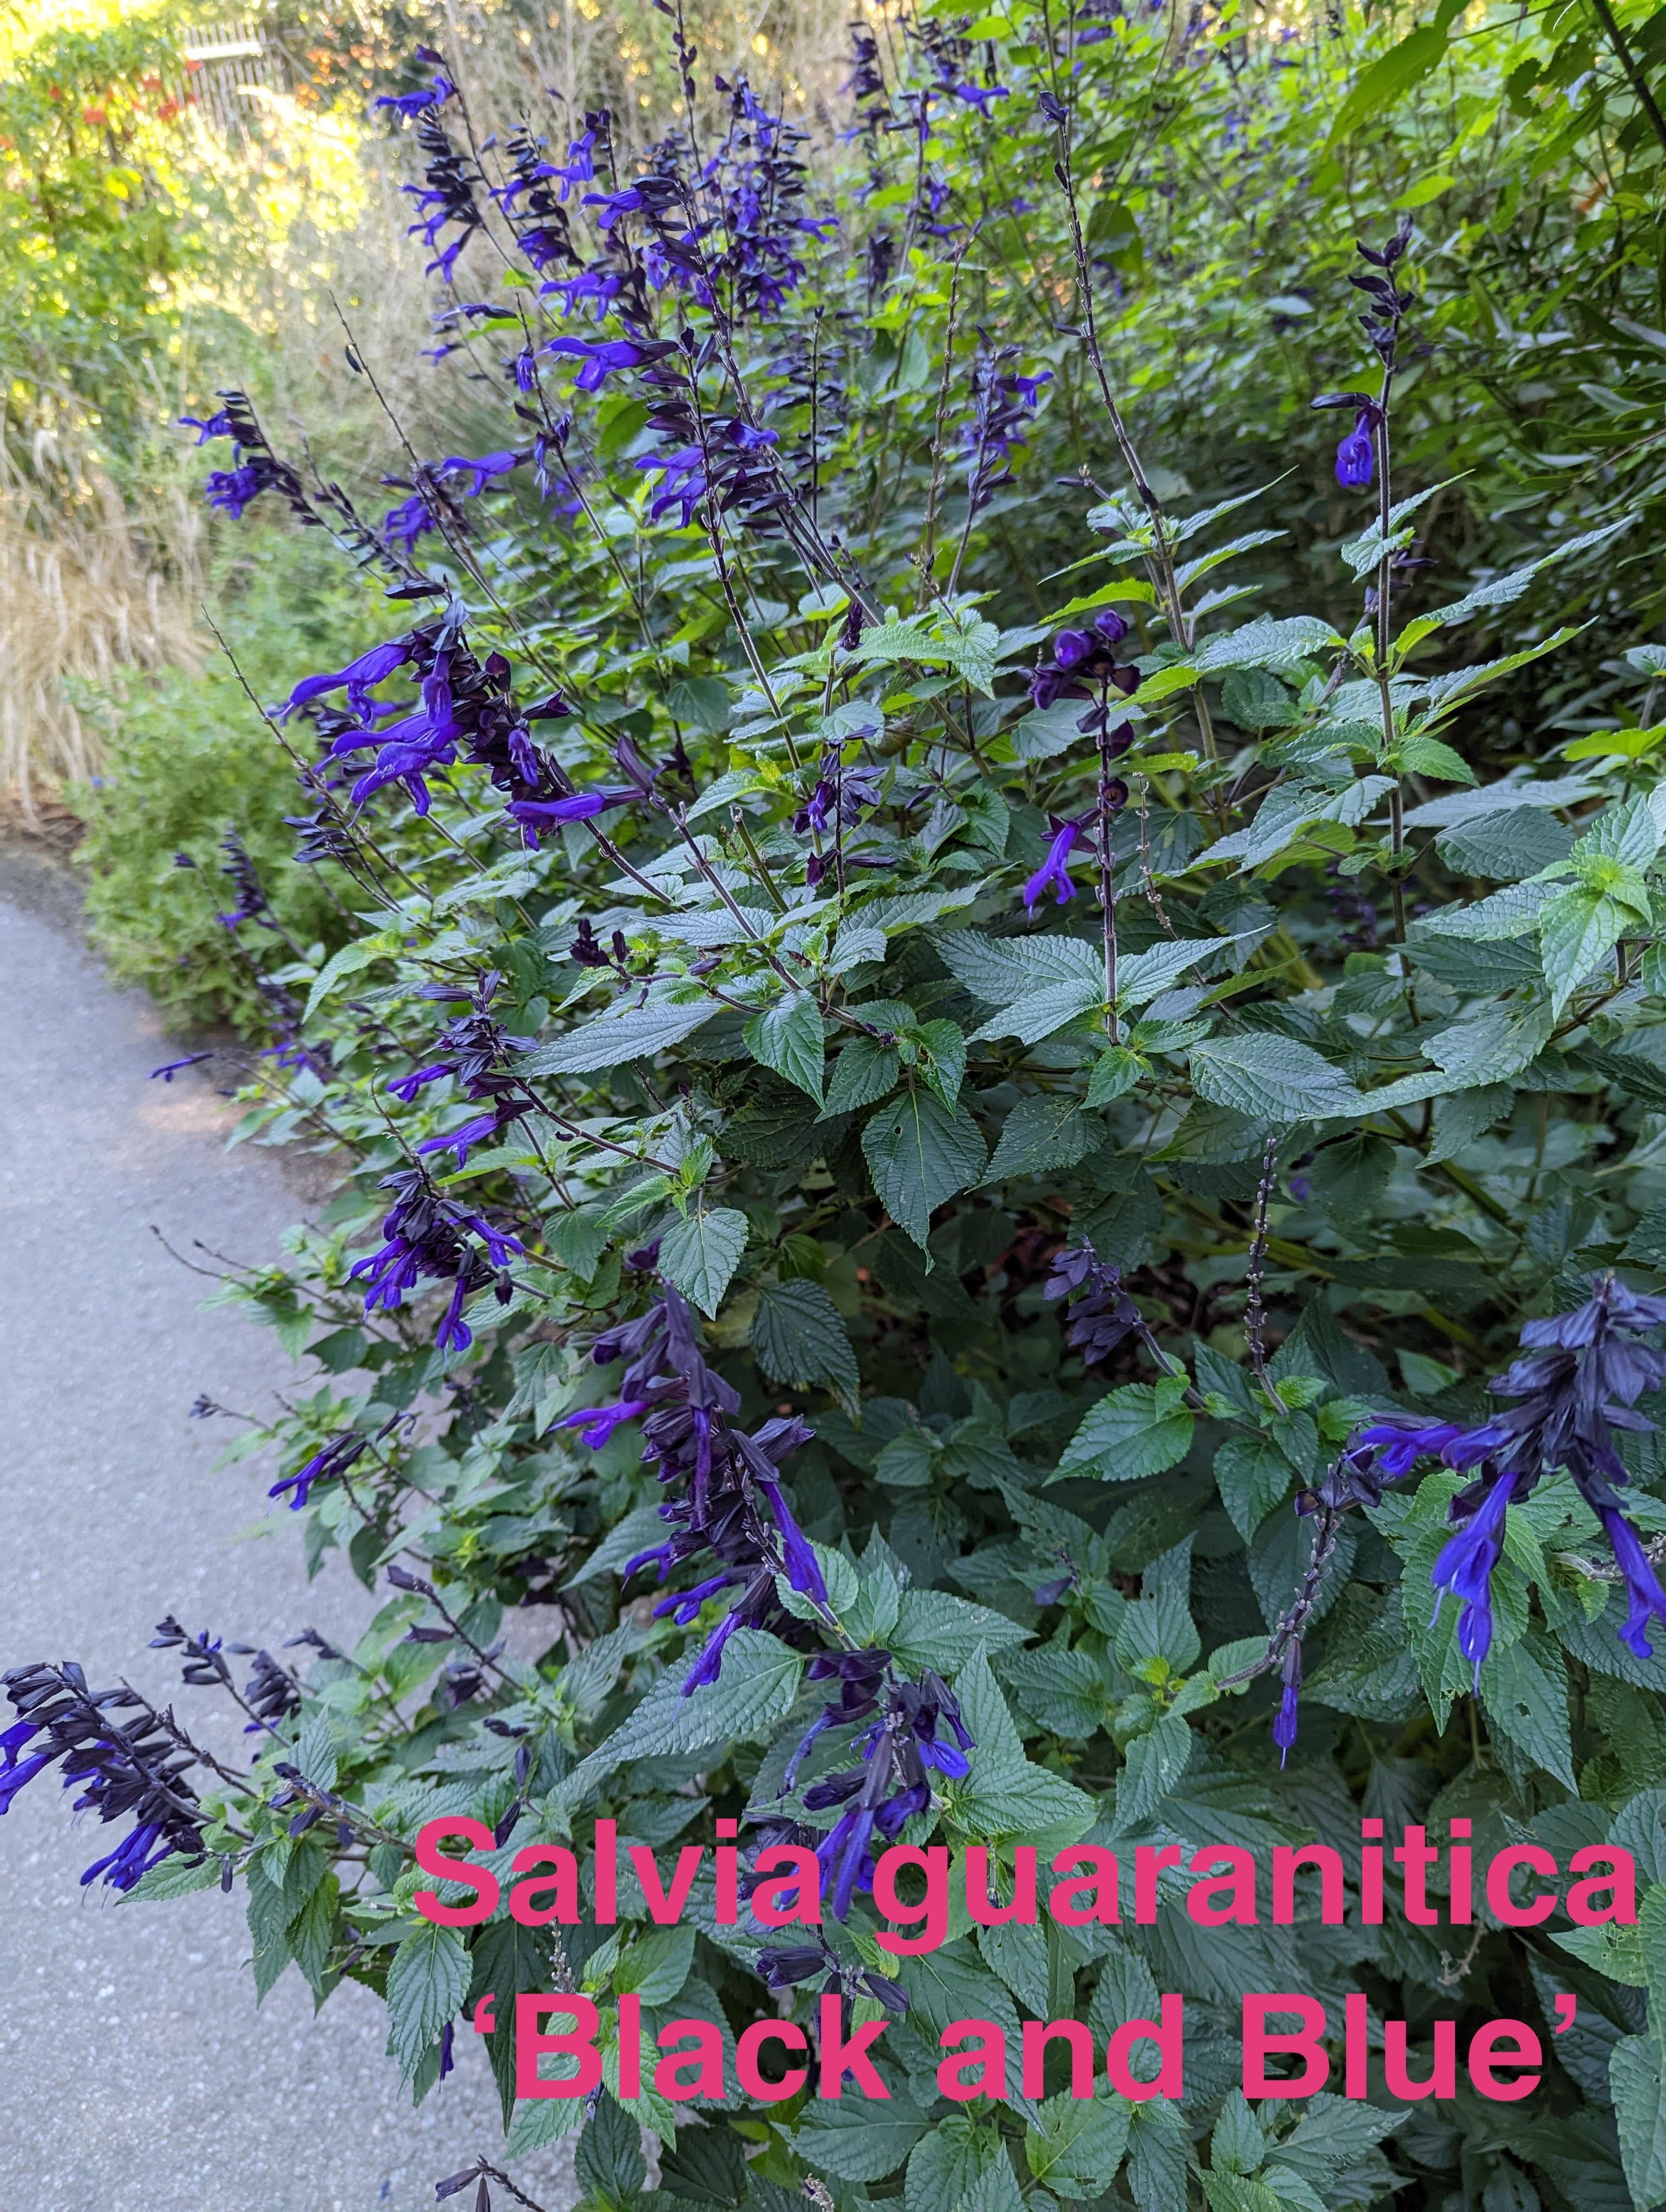 Salvia guaranitica "Black and Blue"